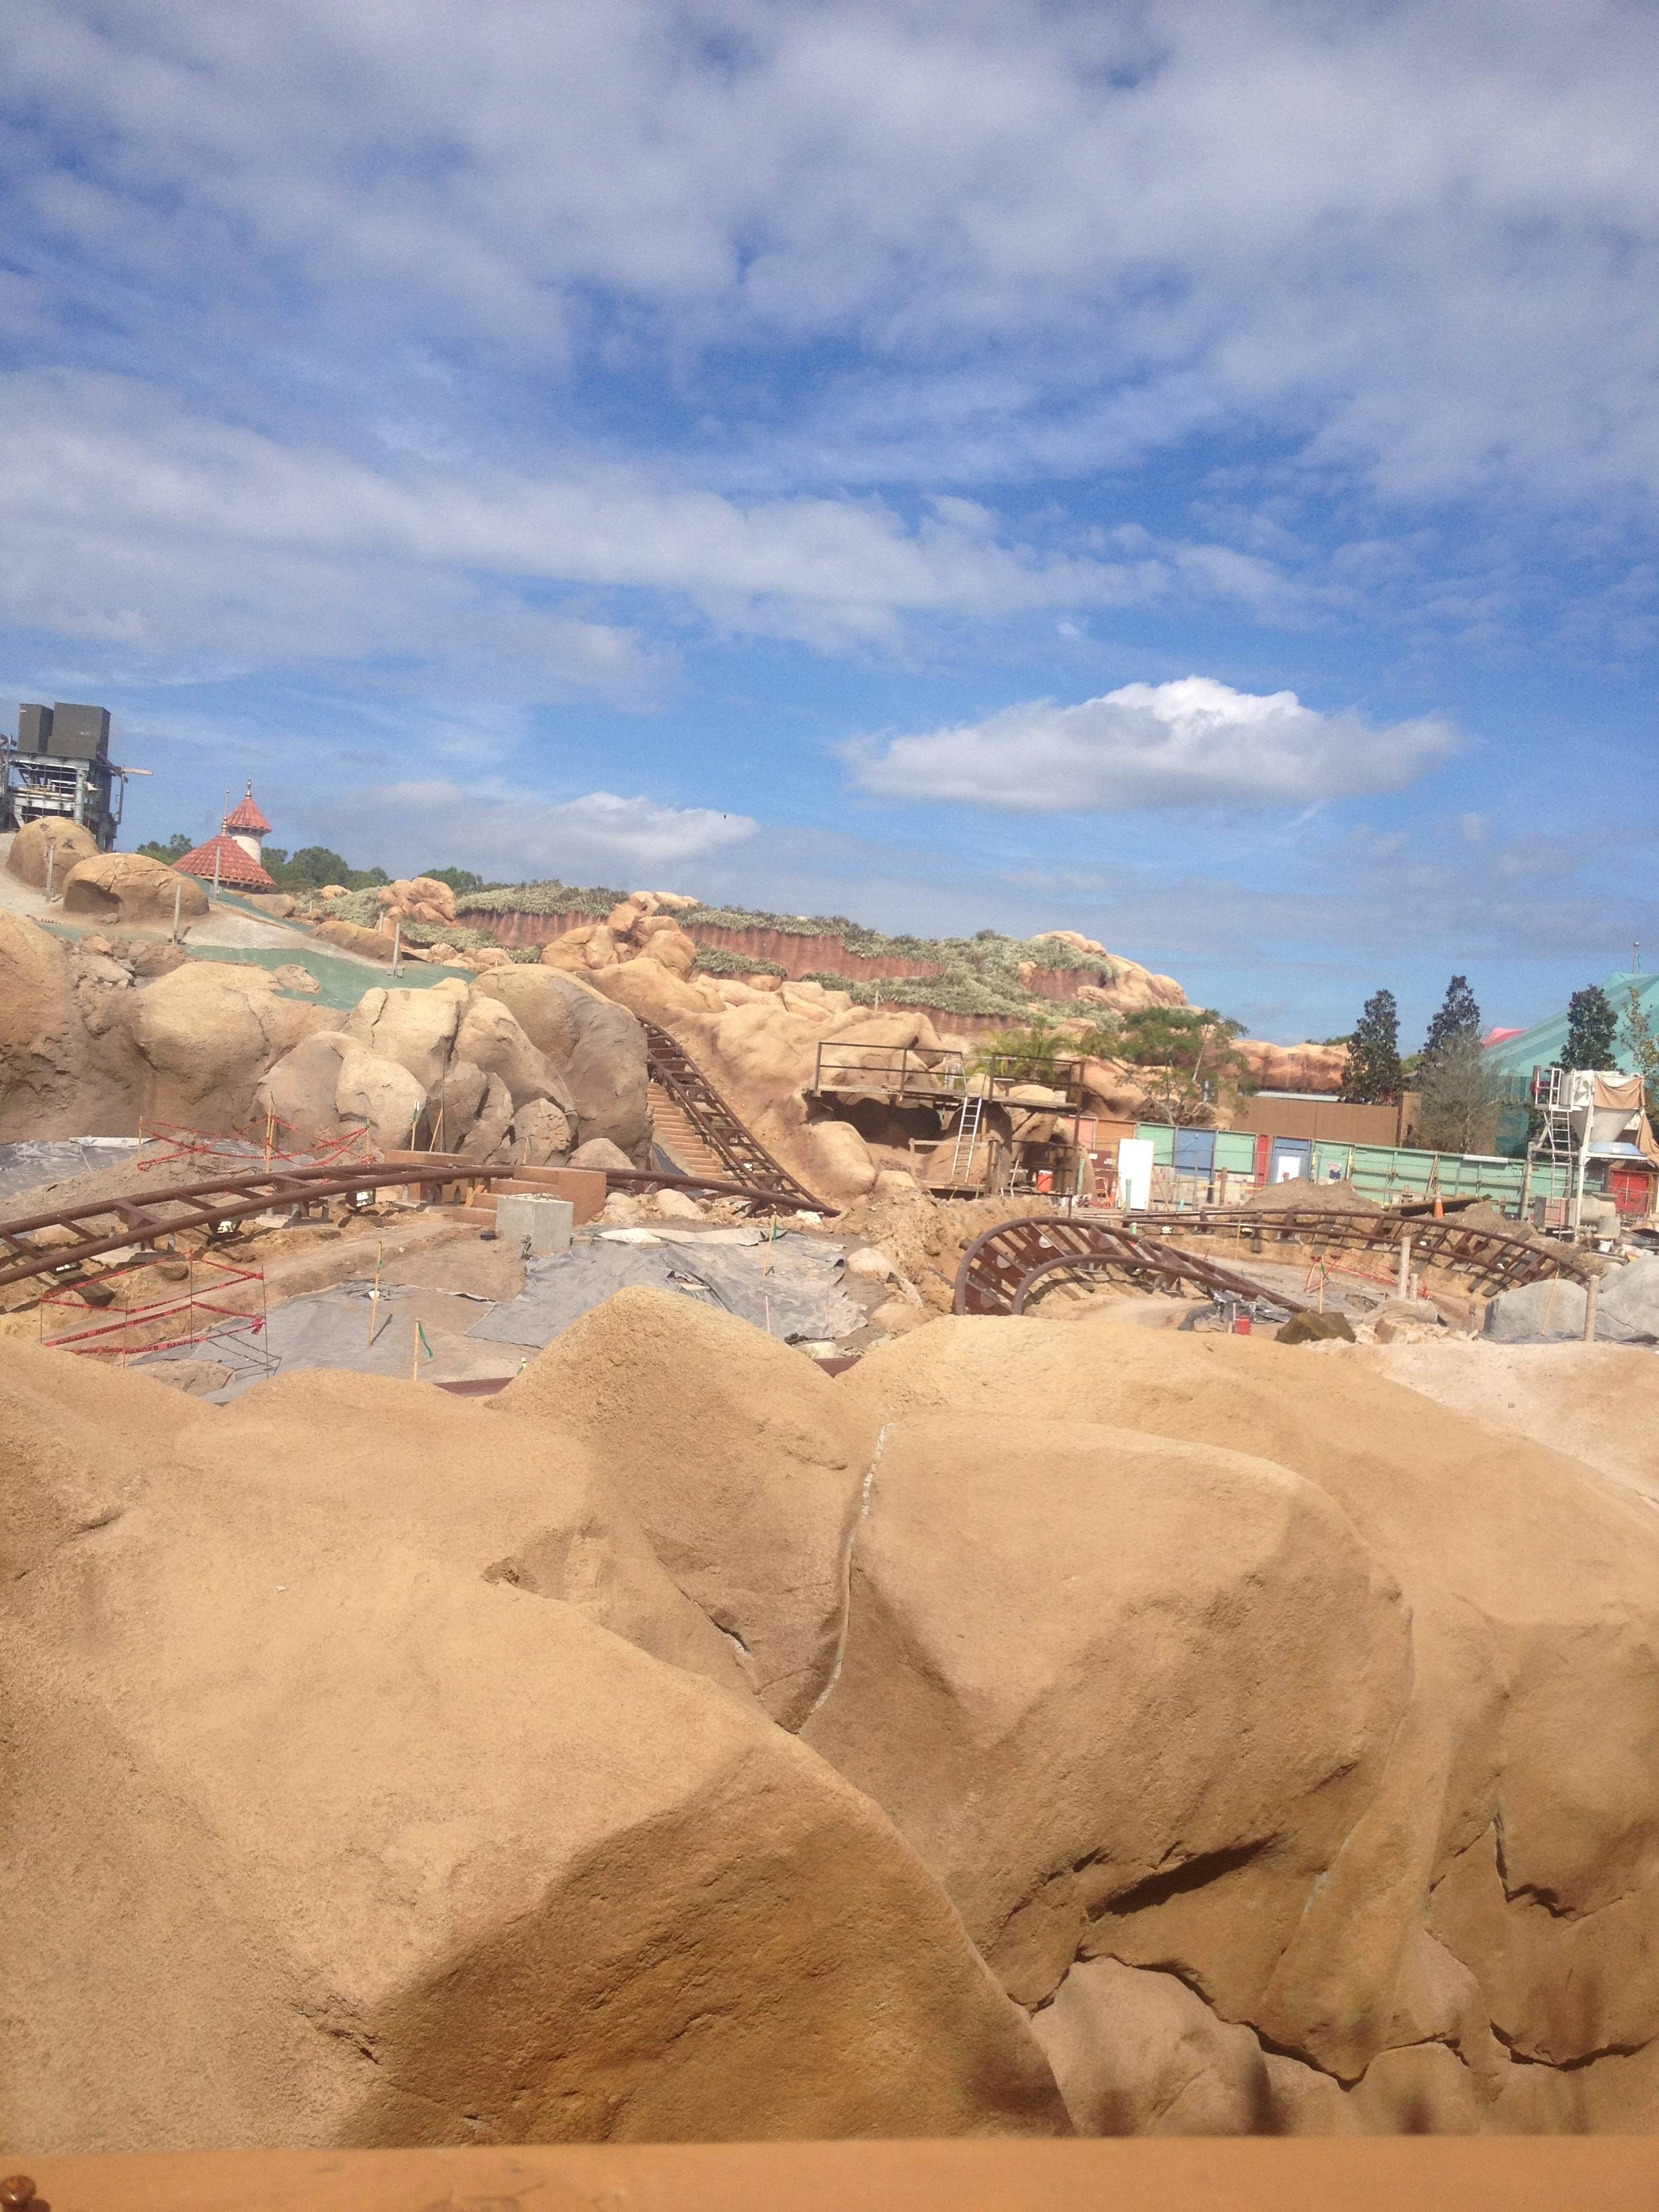 PHOTOS - Seven Dwarfs Mine Train construction site update